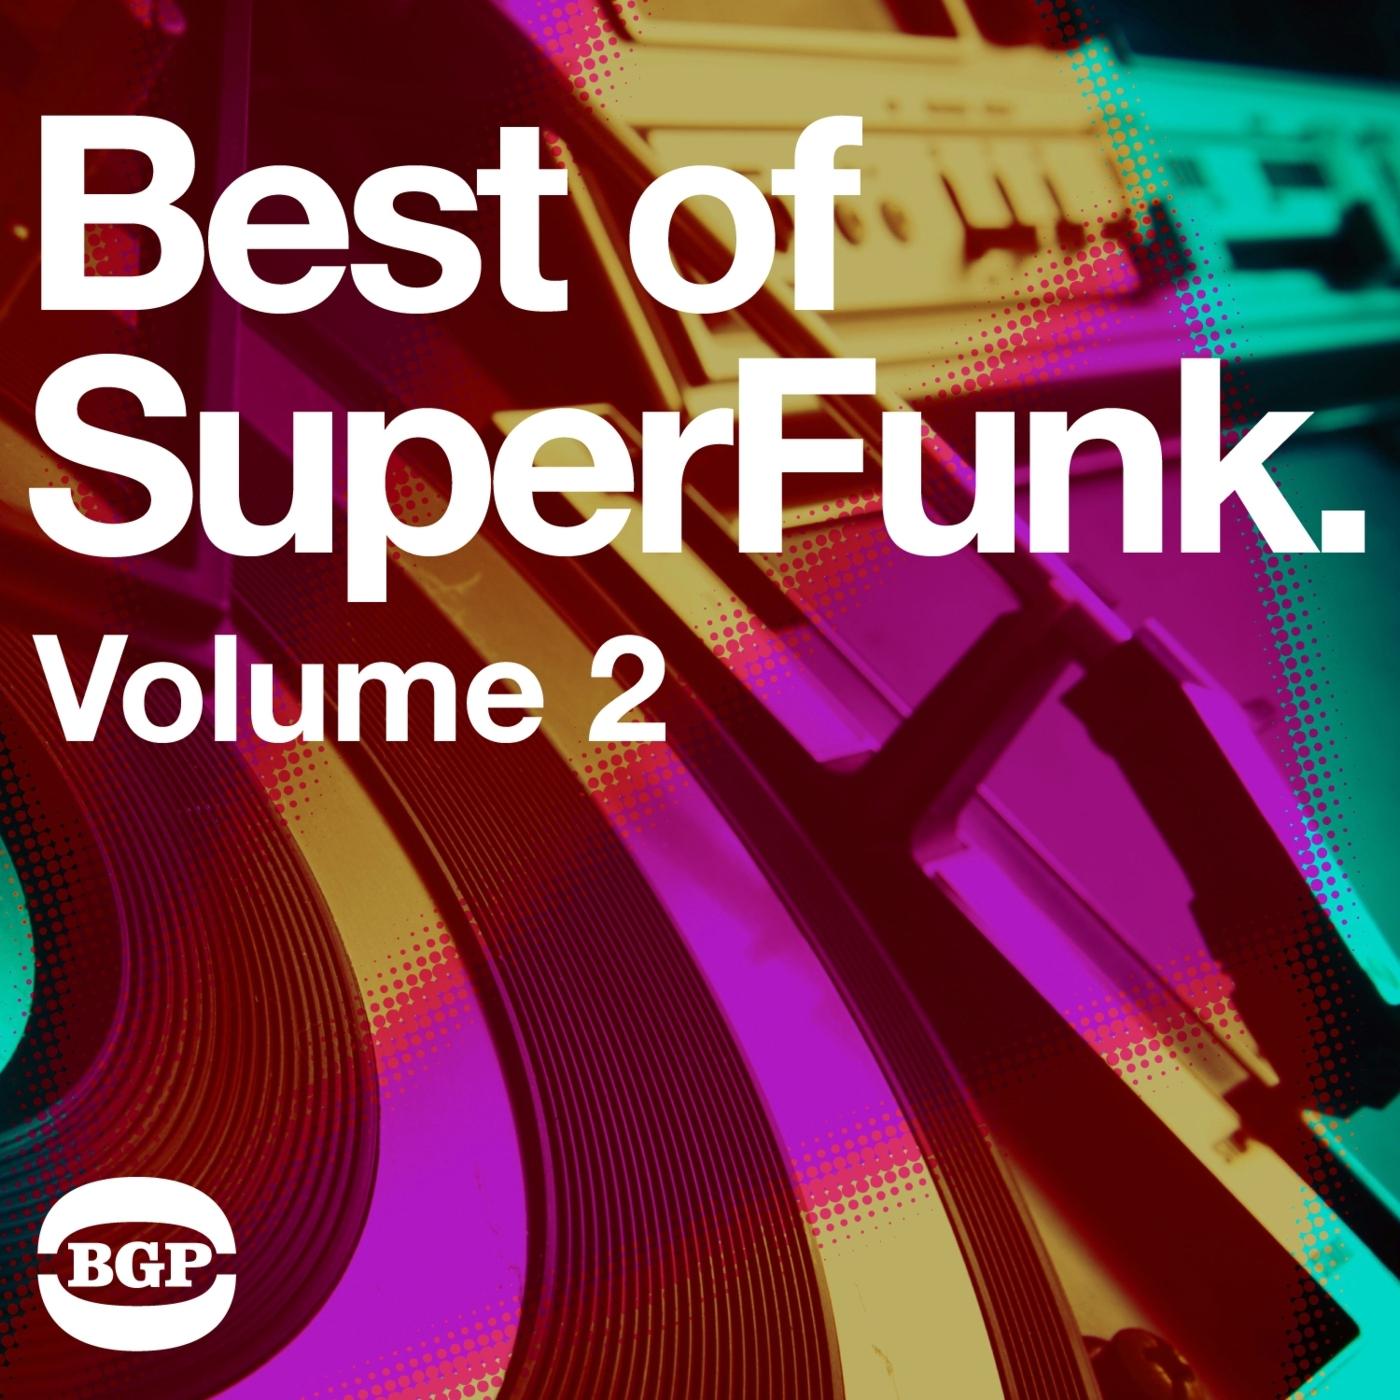 The Best Of Superfunk Vol 2